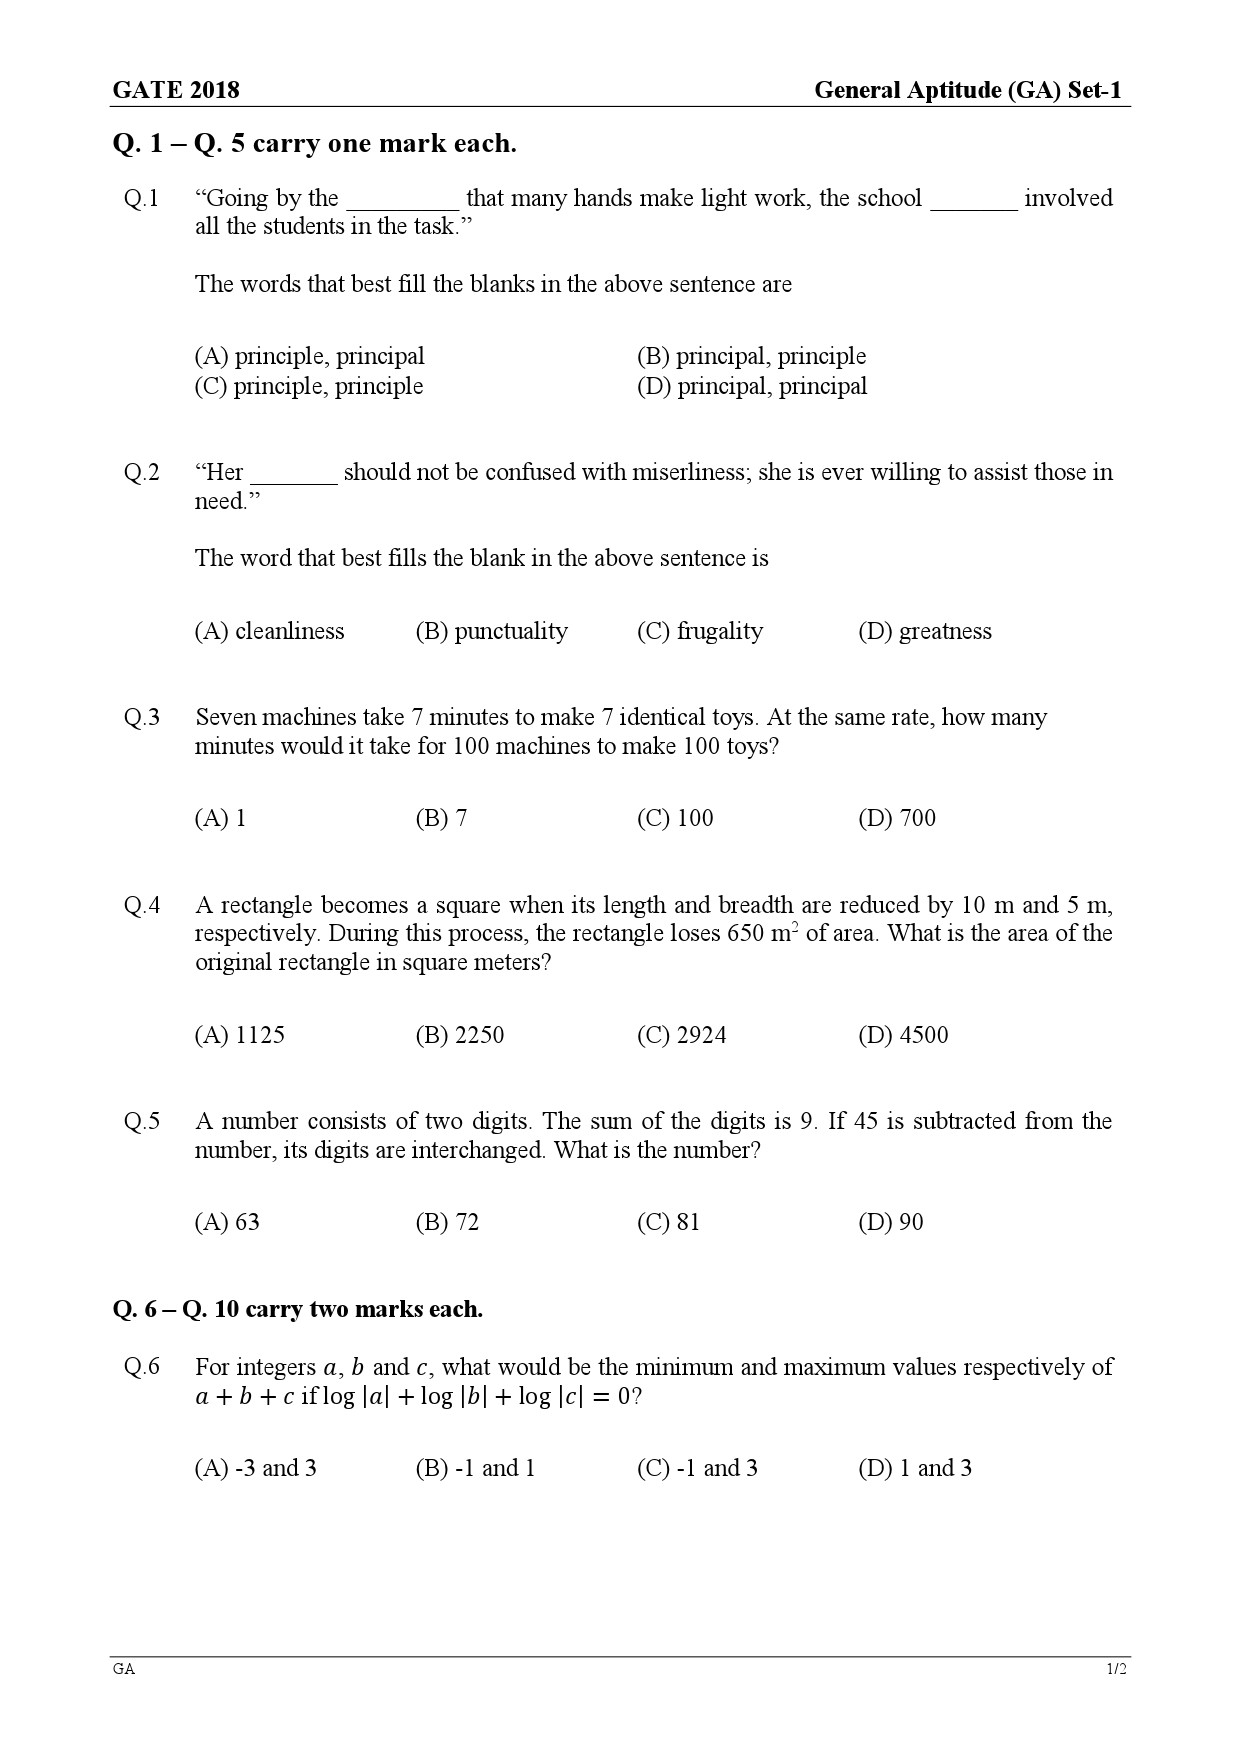 GATE Exam Question Paper 2018 Petroleum Engineering 1